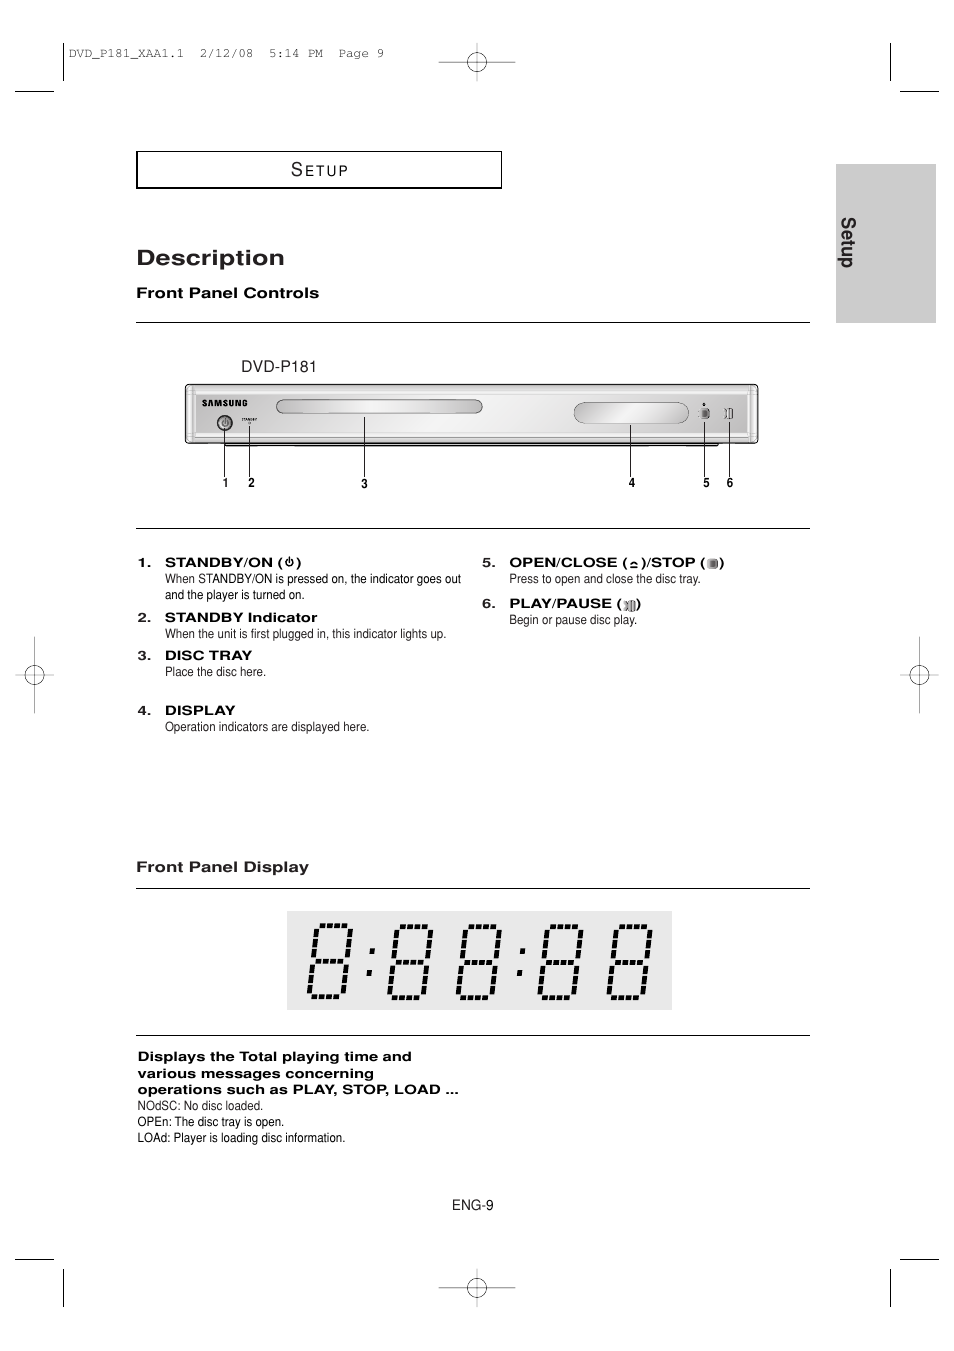 Description, Setup s | Samsung DVD-P181-XAA User Manual | Page 9 / 55 |  Original mode